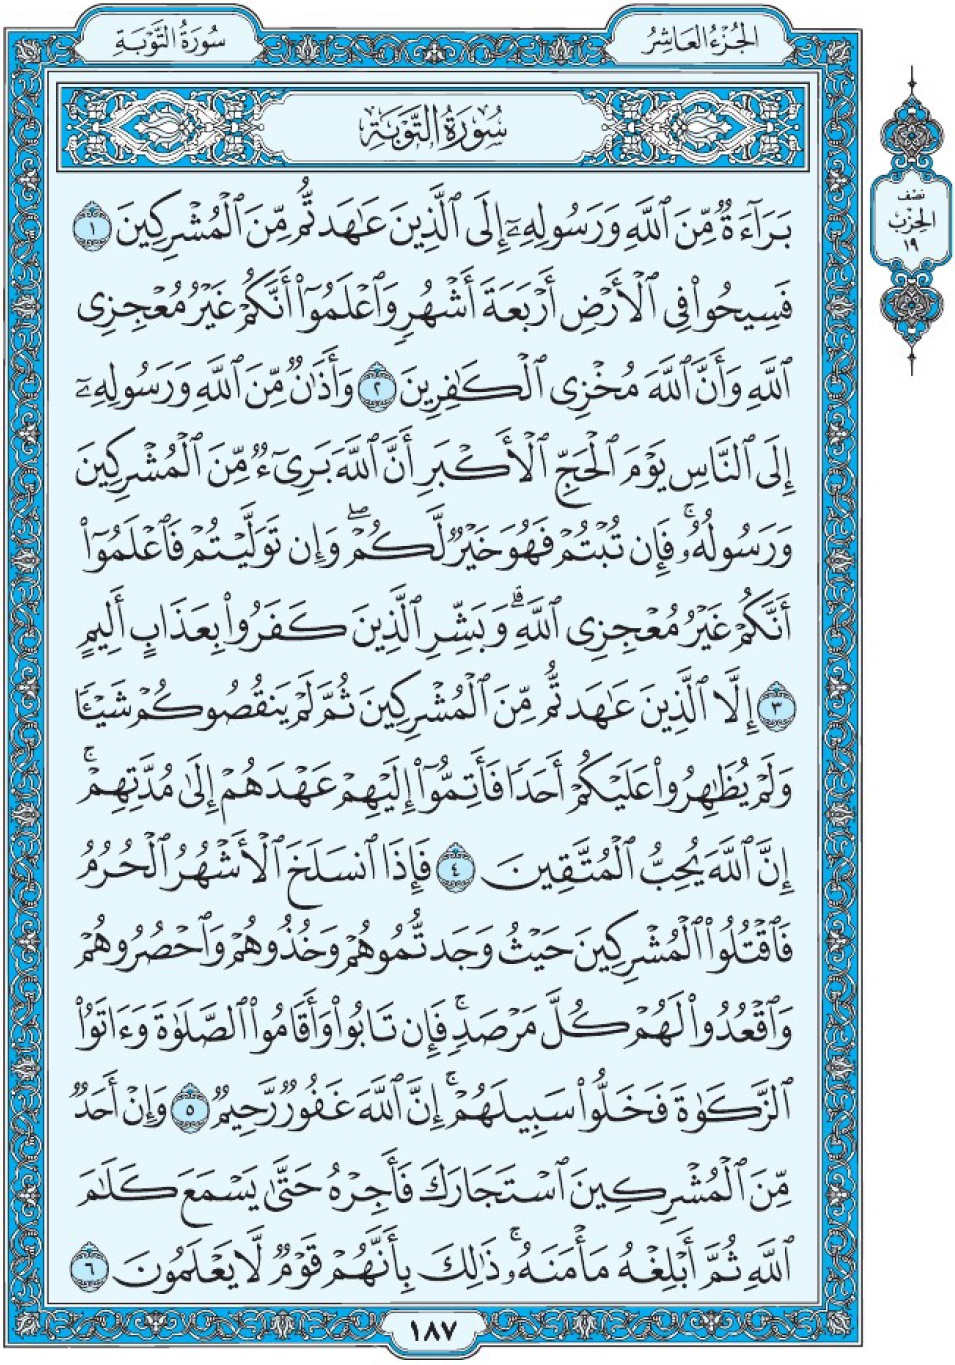 Коран Мединский мусхаф страница 187, сура 9 Ат-Тауба سورة ٩ االتوبة 